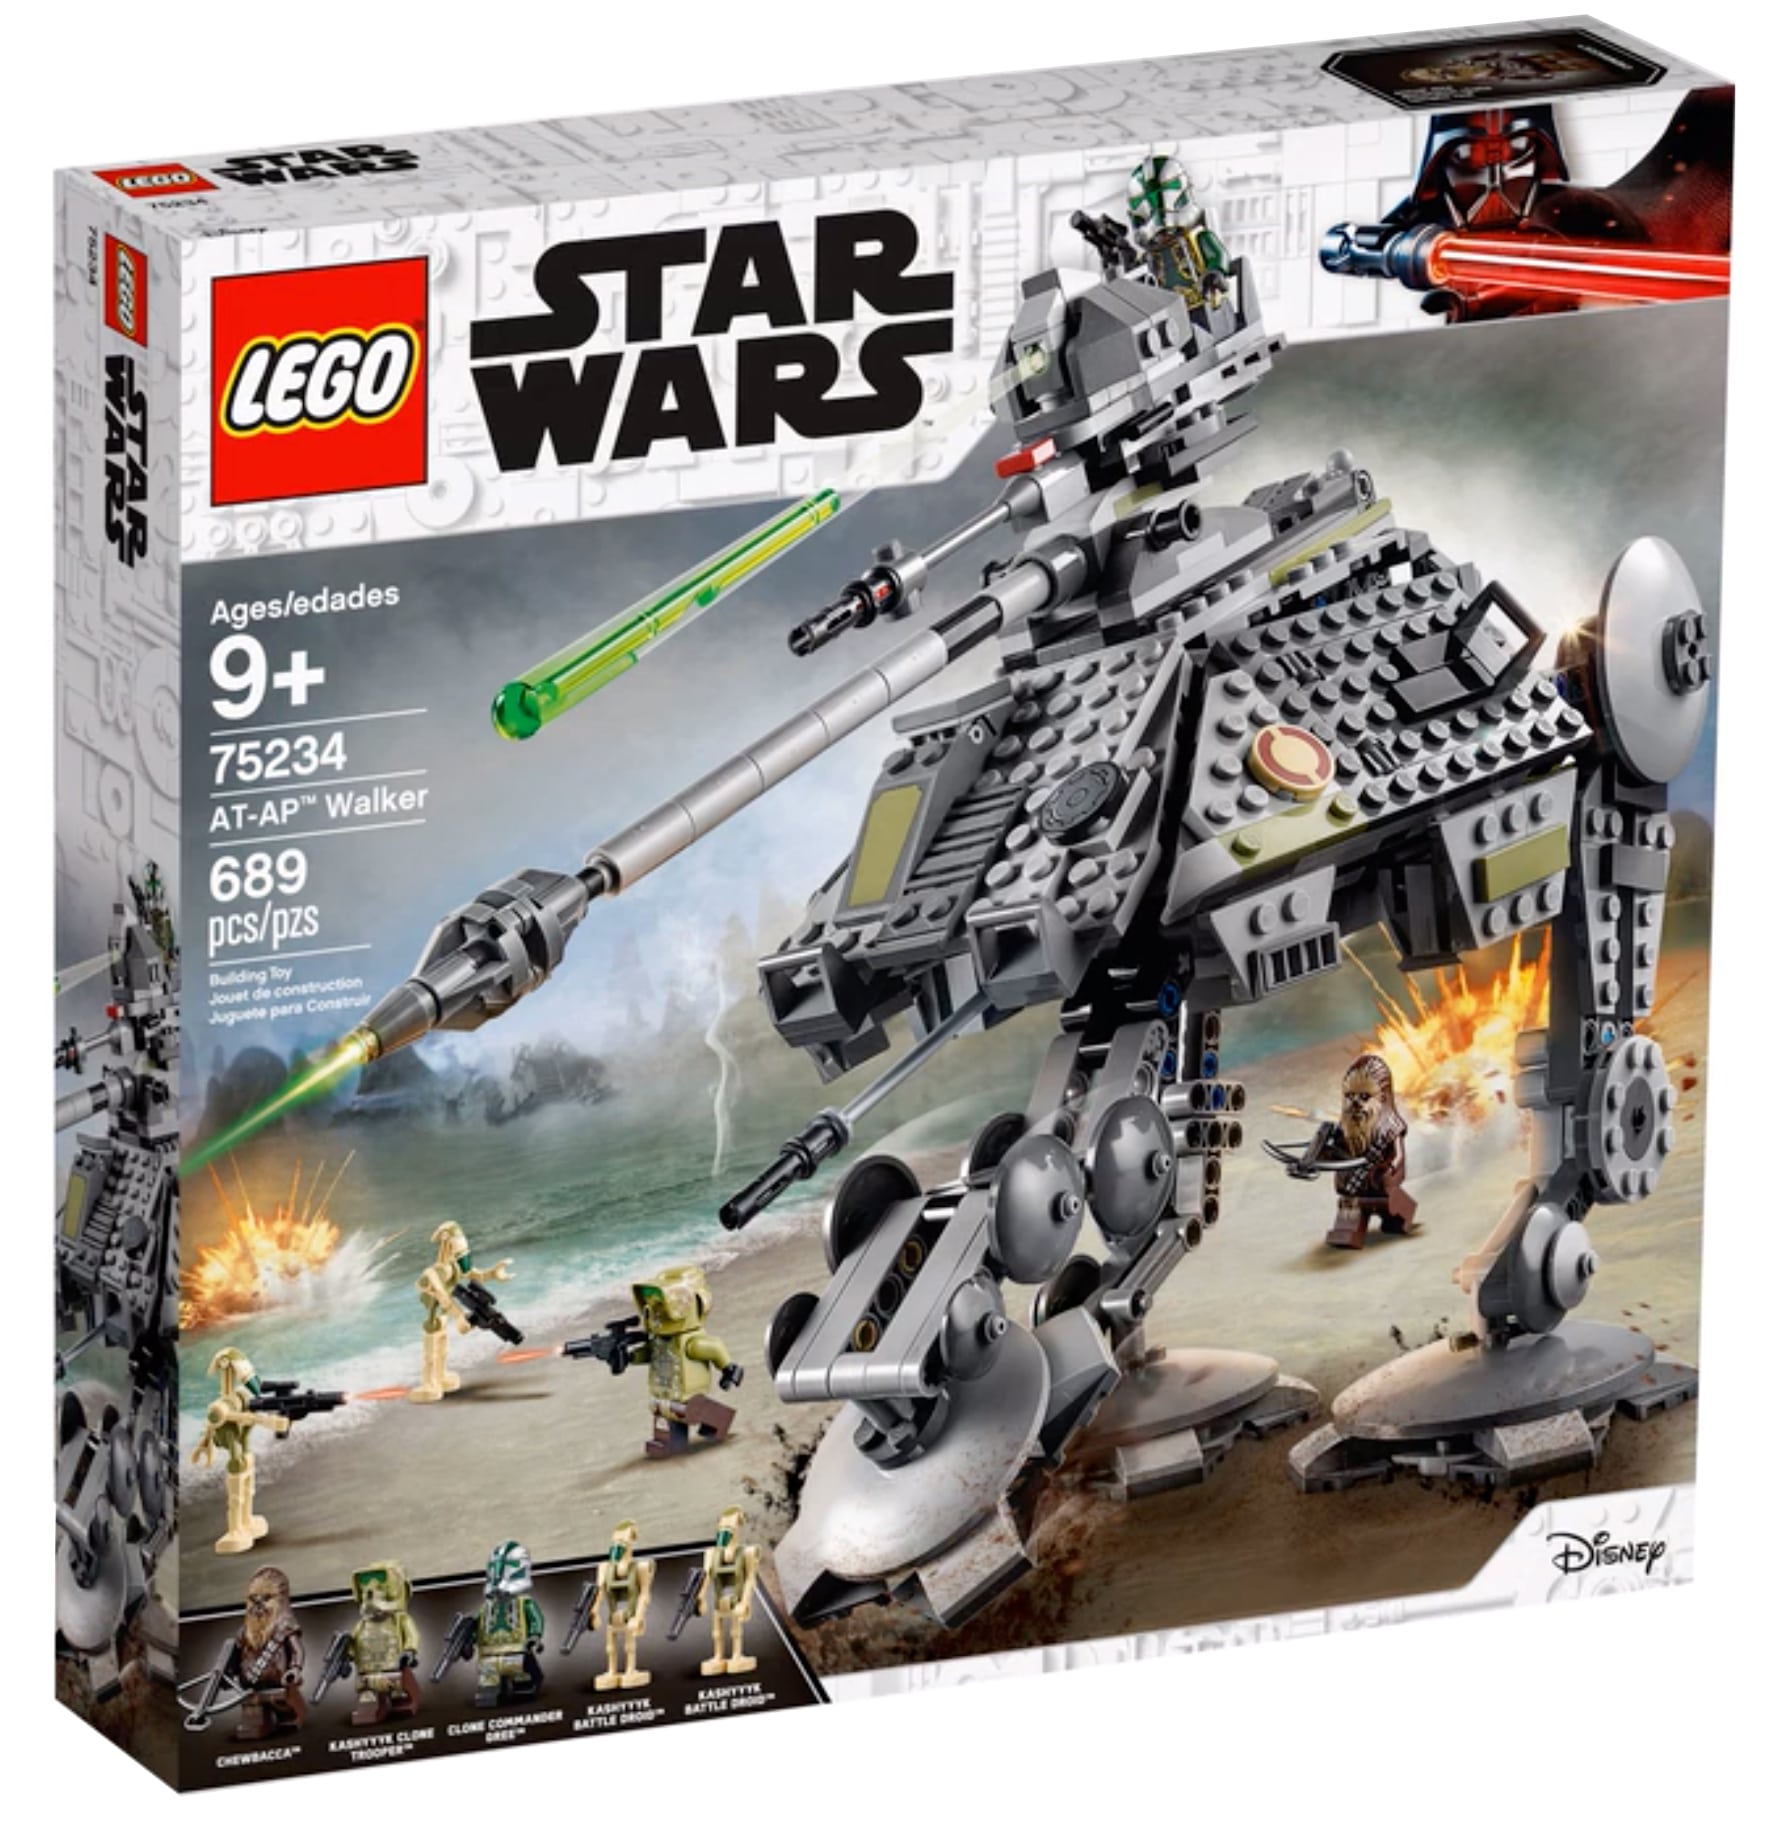 new lego 2019 star wars sets